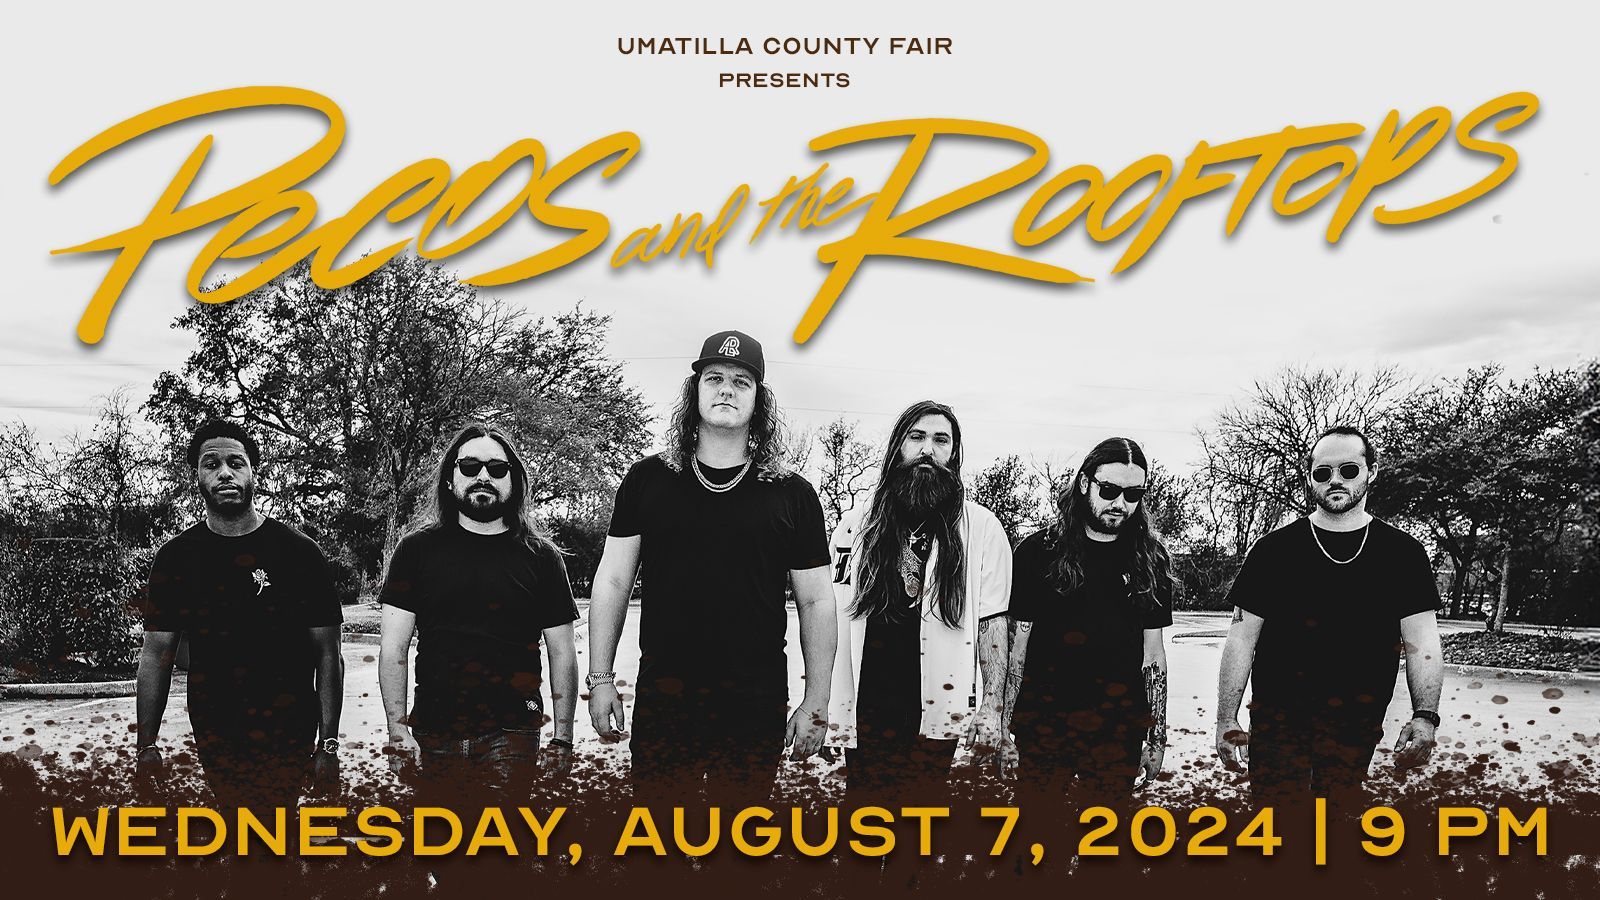 Pecos & the Rooftop concert tour tickets for the Umatilla County Fair